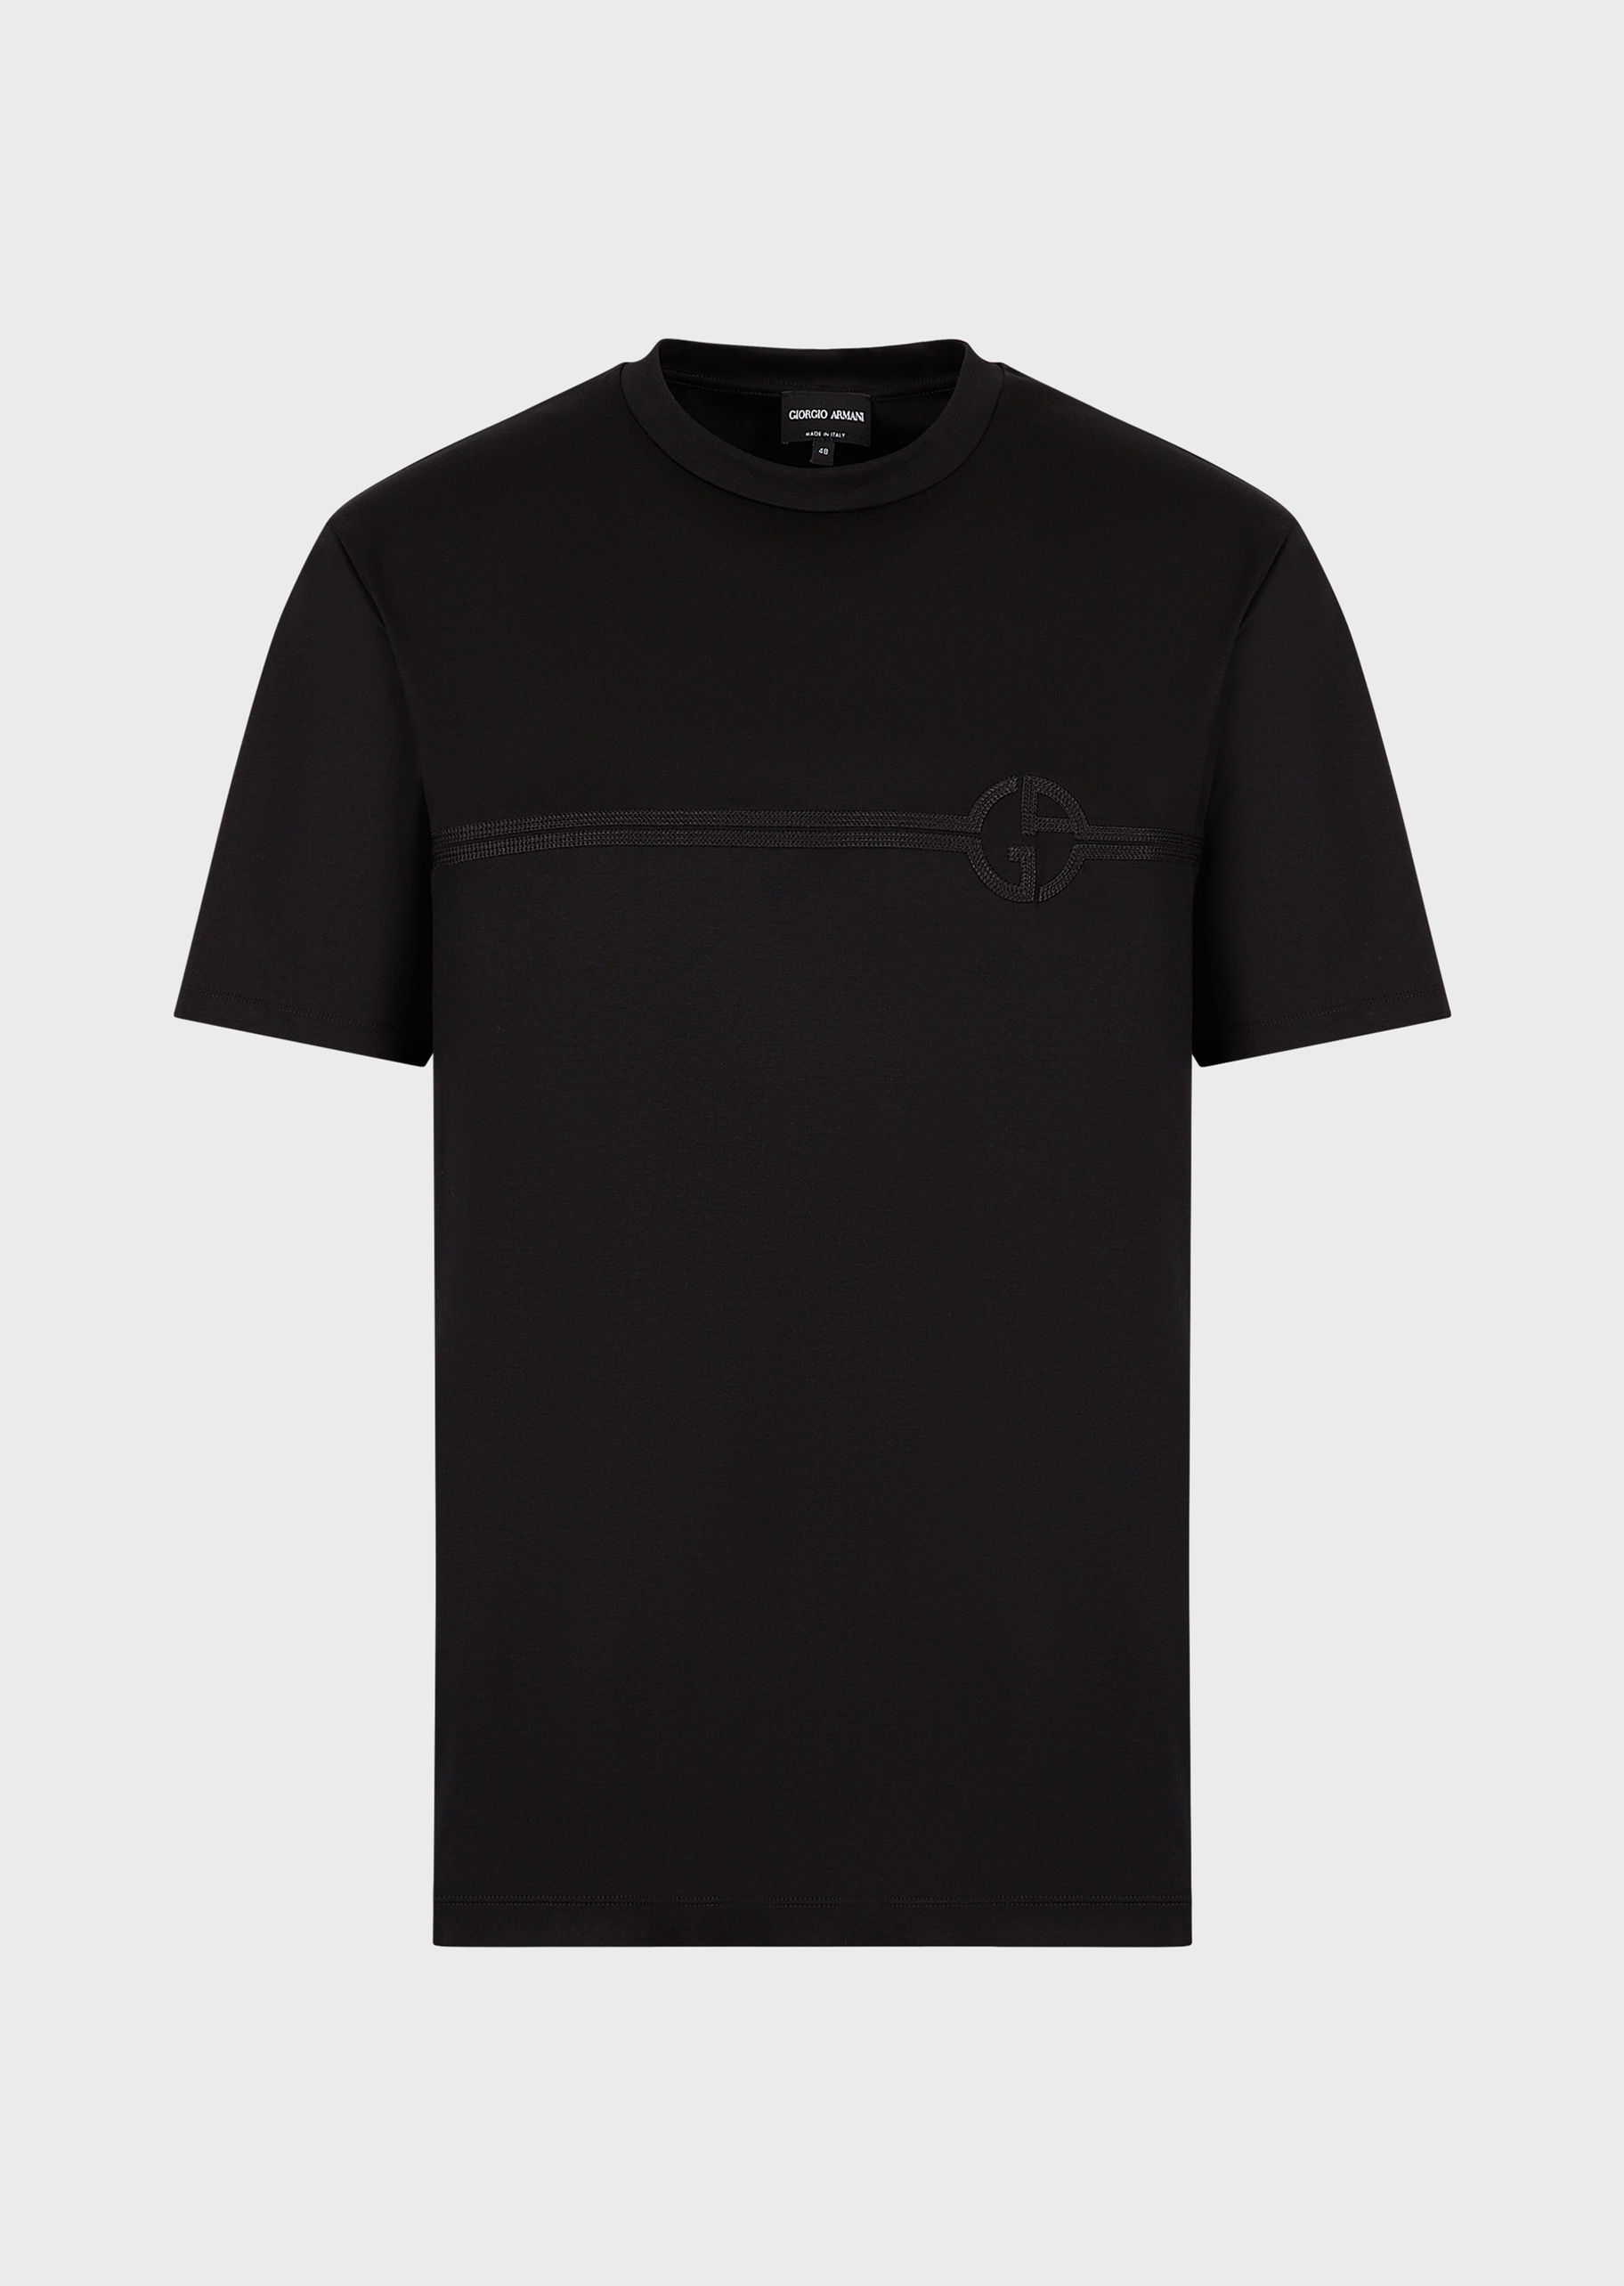 Giorgio Armani 双线刺绣圆领T恤